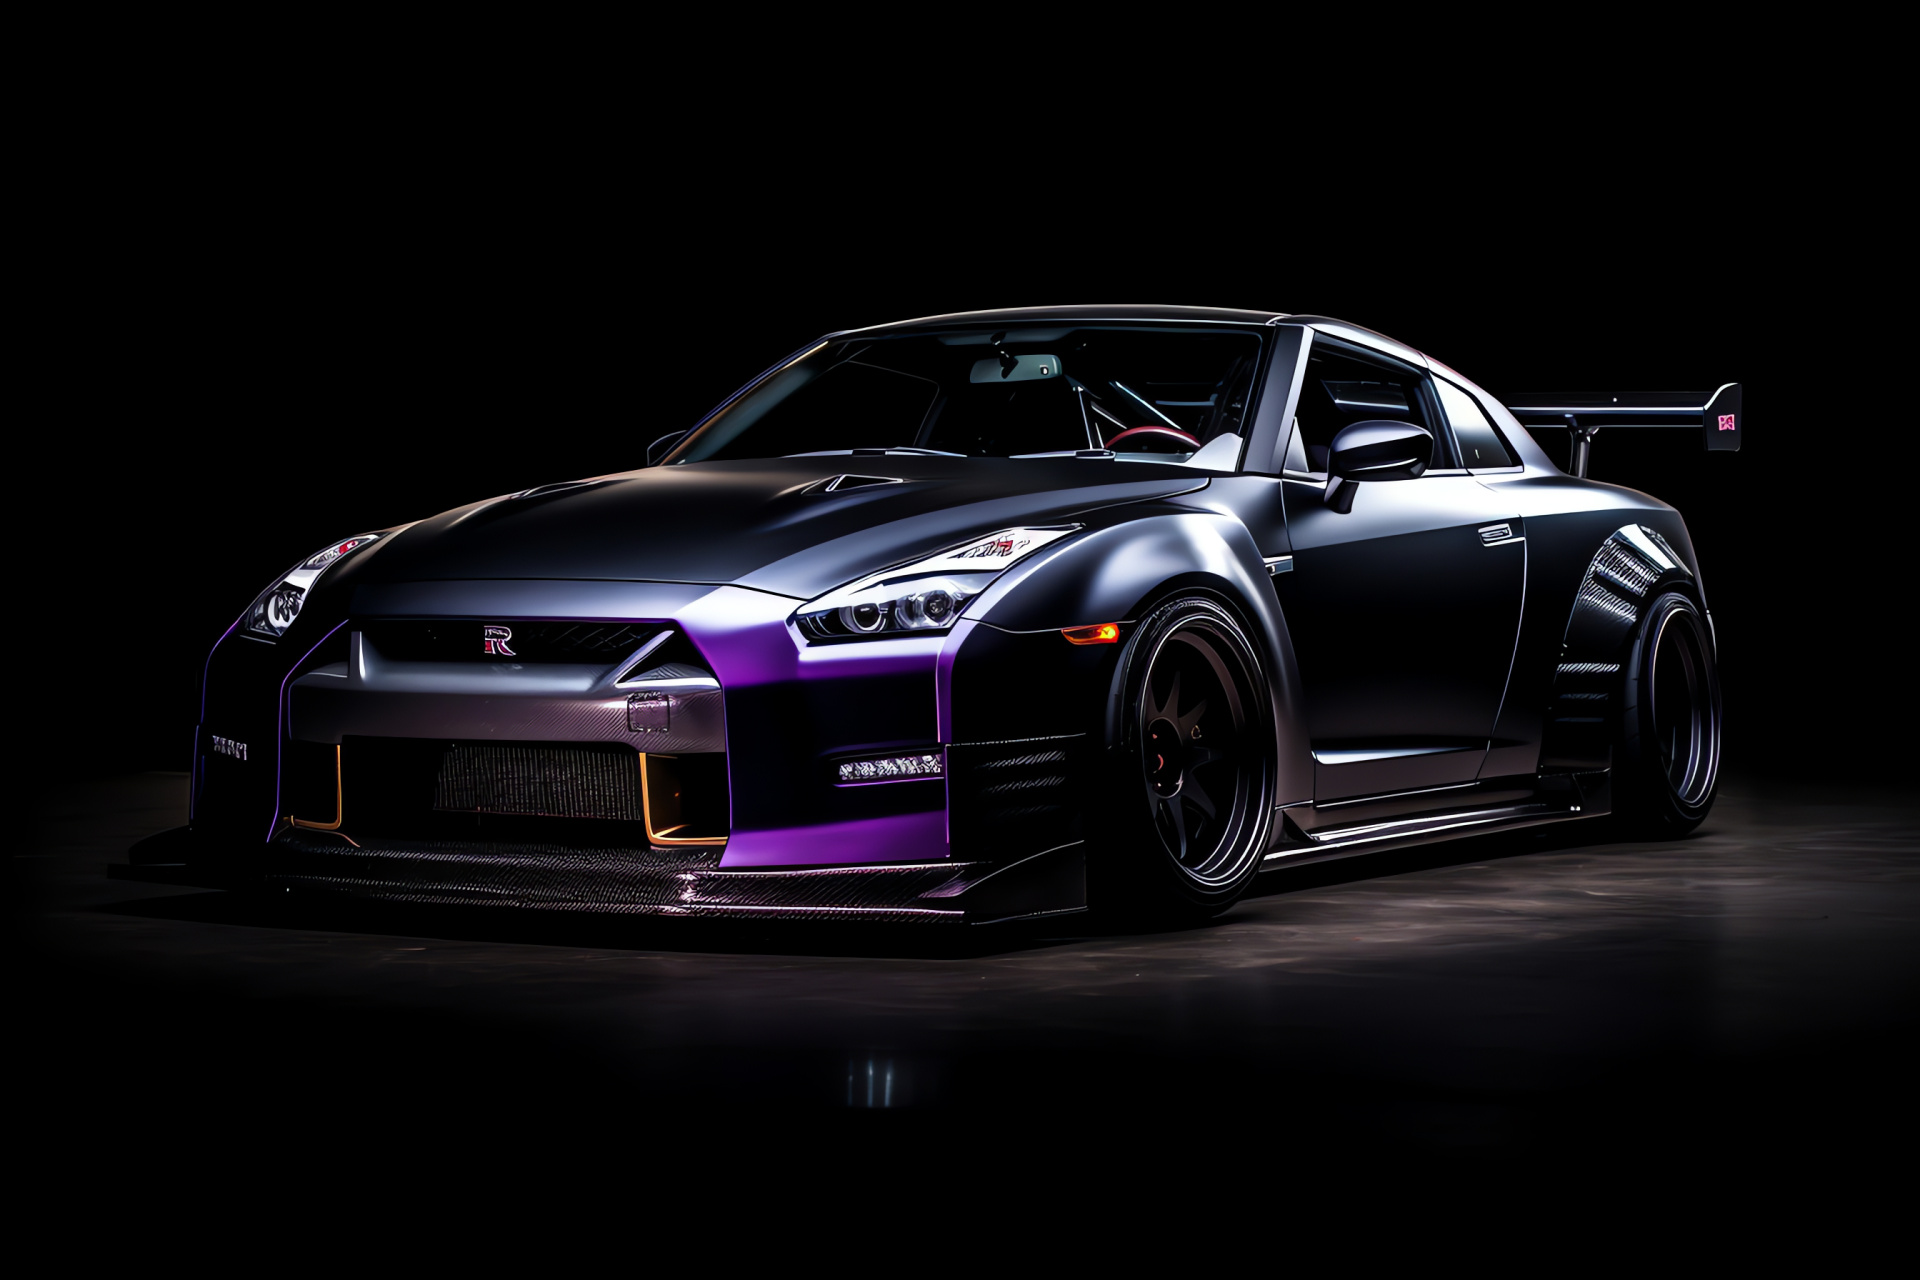 Nissan GT-R Rocket Bunny, High-performance tuner, Rare purple shade, Powerful sports car, Simple contrast backdrop, HD Desktop Image